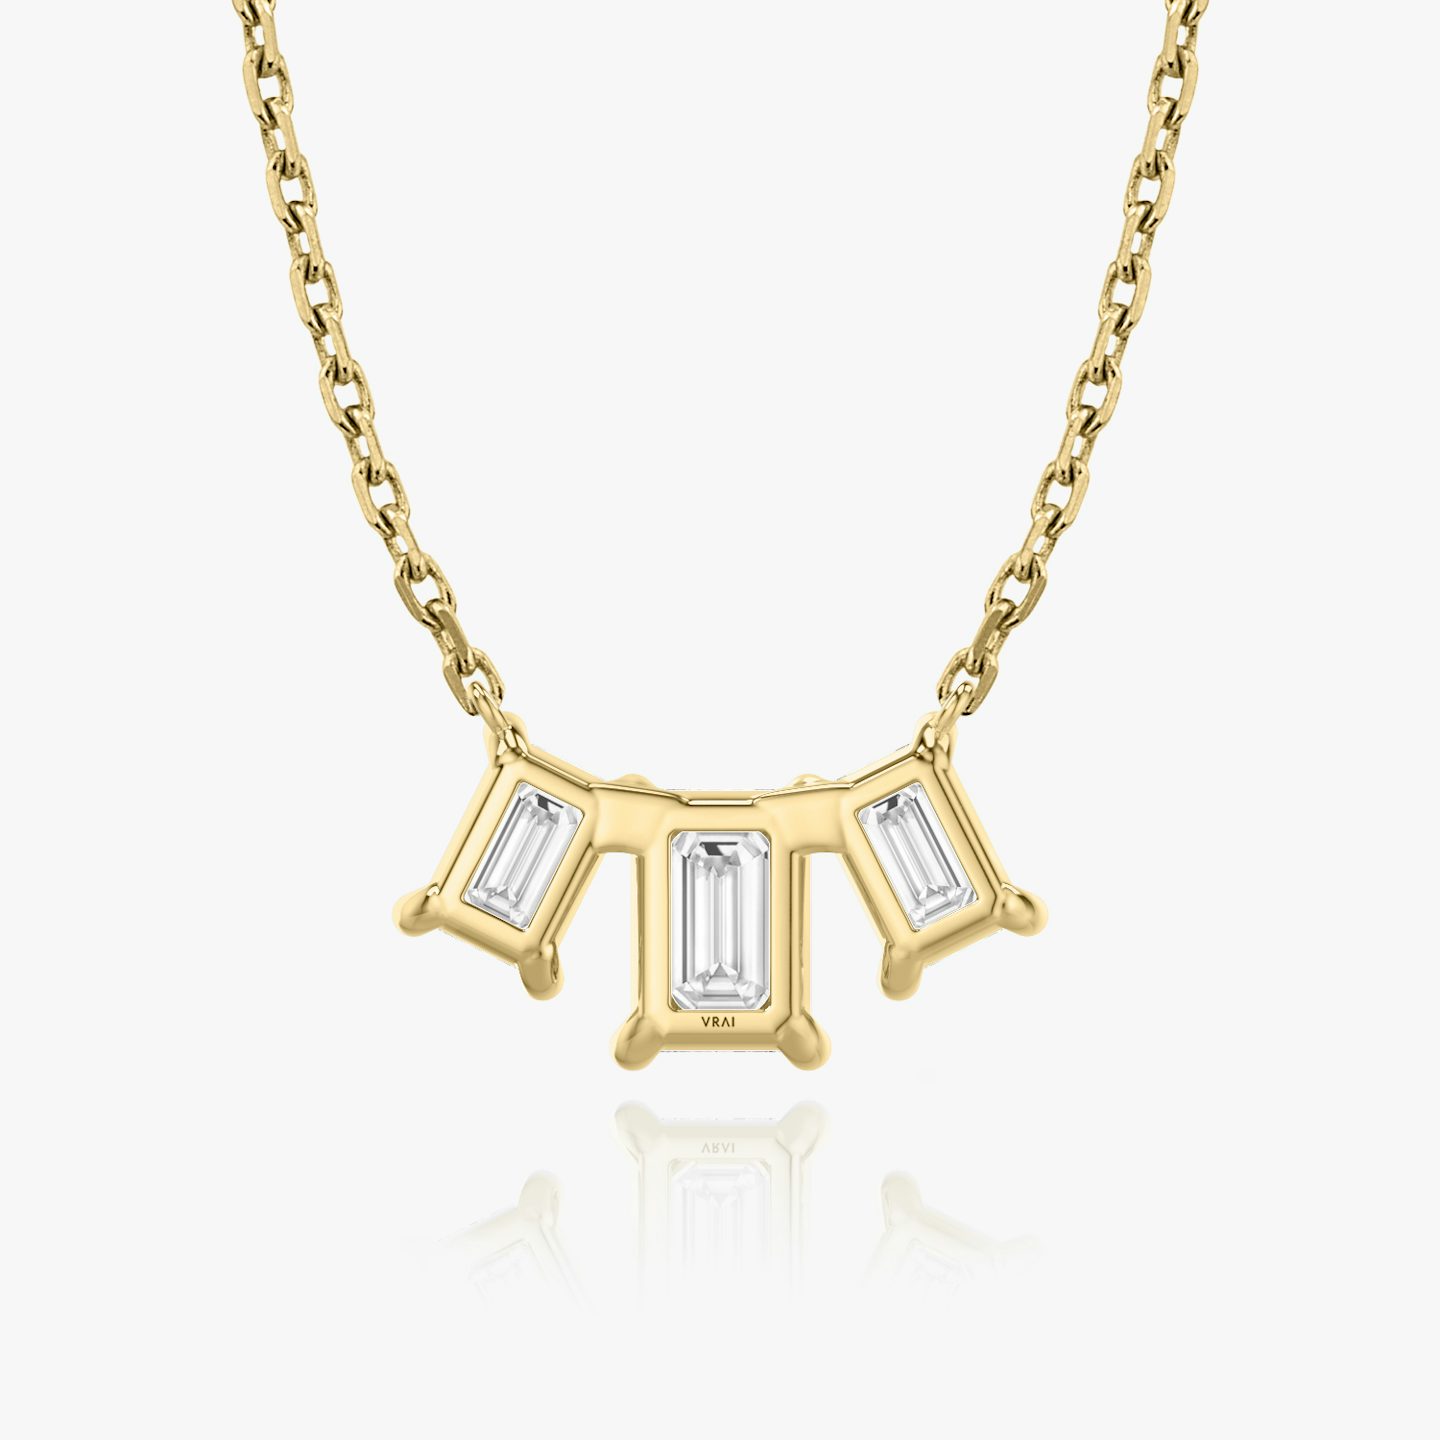 Arc Necklace | Emerald | 14k | Yellow Gold | diamondCount: 3 | diamondSize: large | chainLength: 16-18